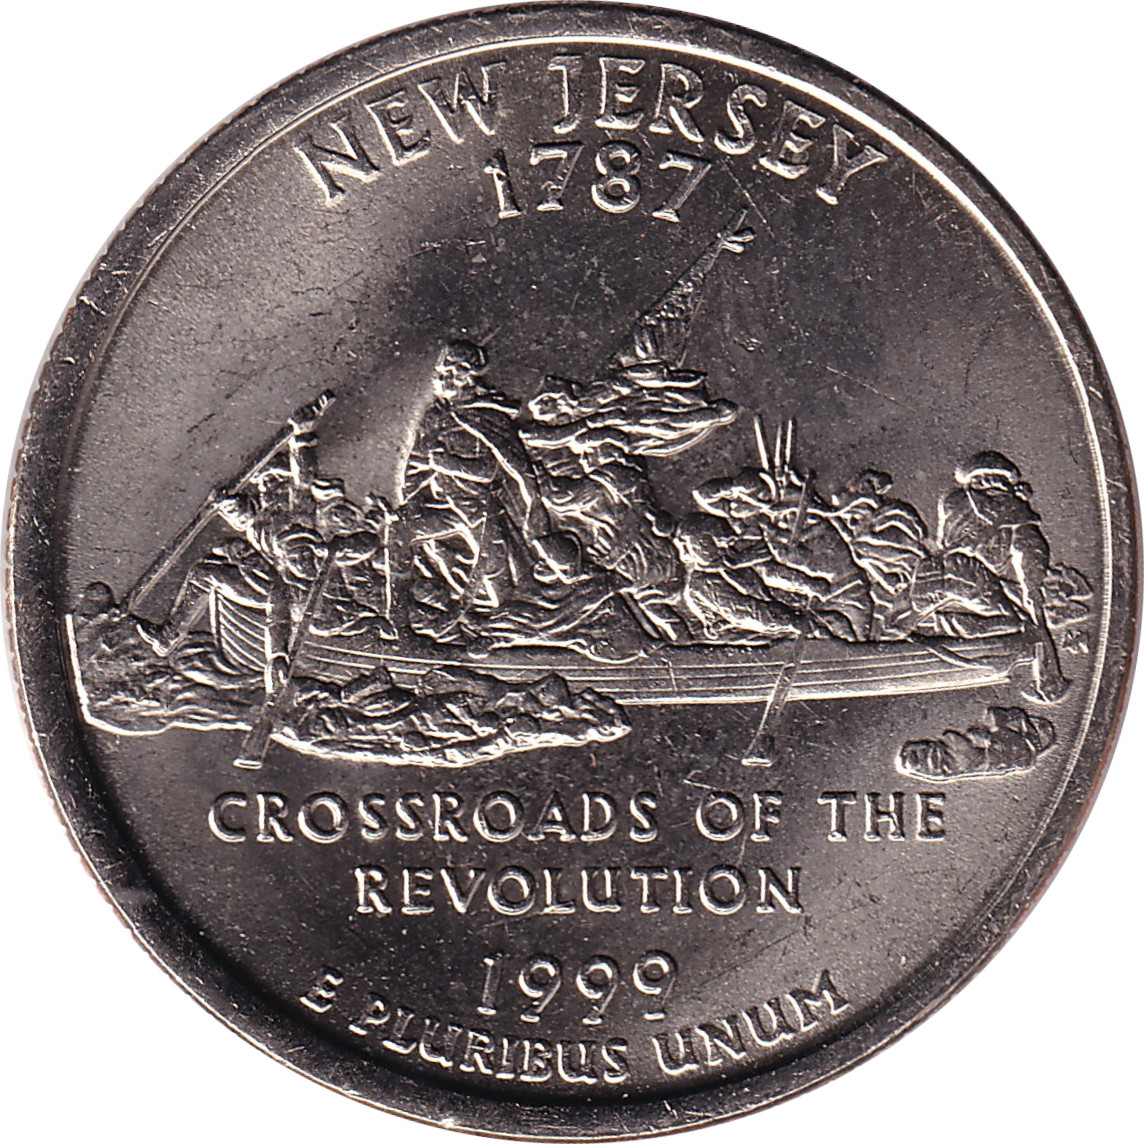 1/4 dollar - New Jersey